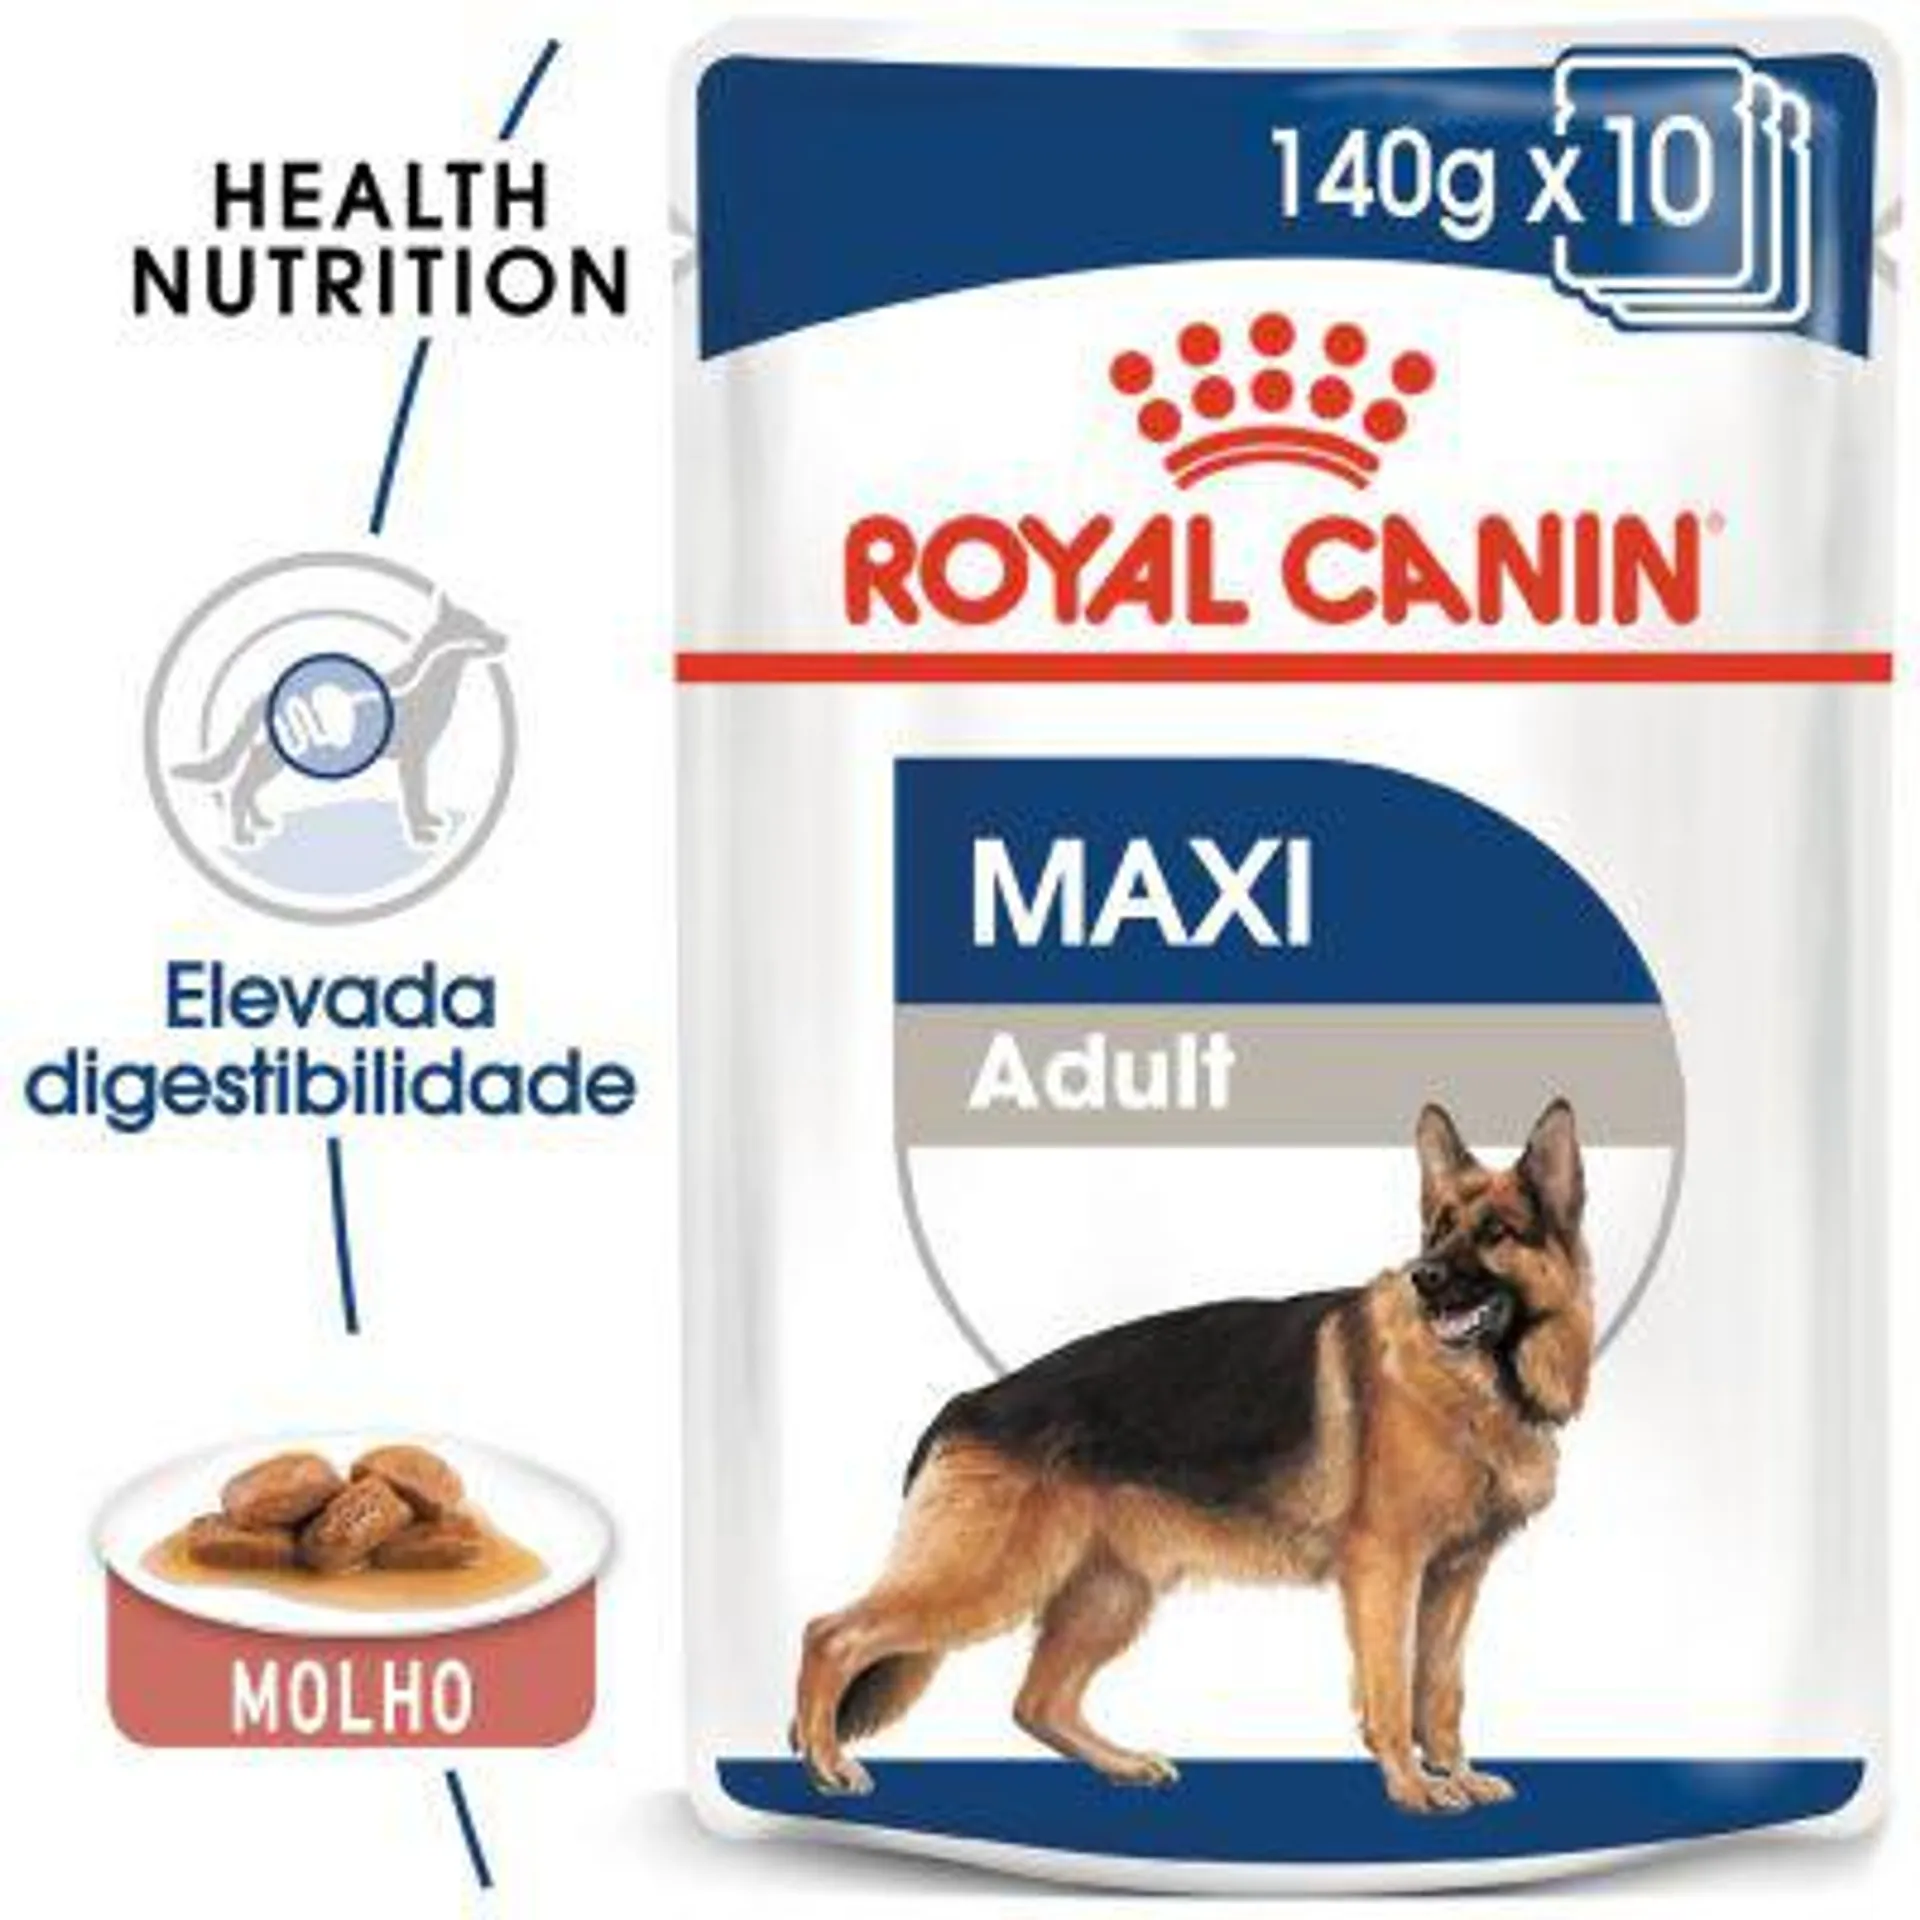 Royal Canin Maxi Adult em molho comida húmida para cães